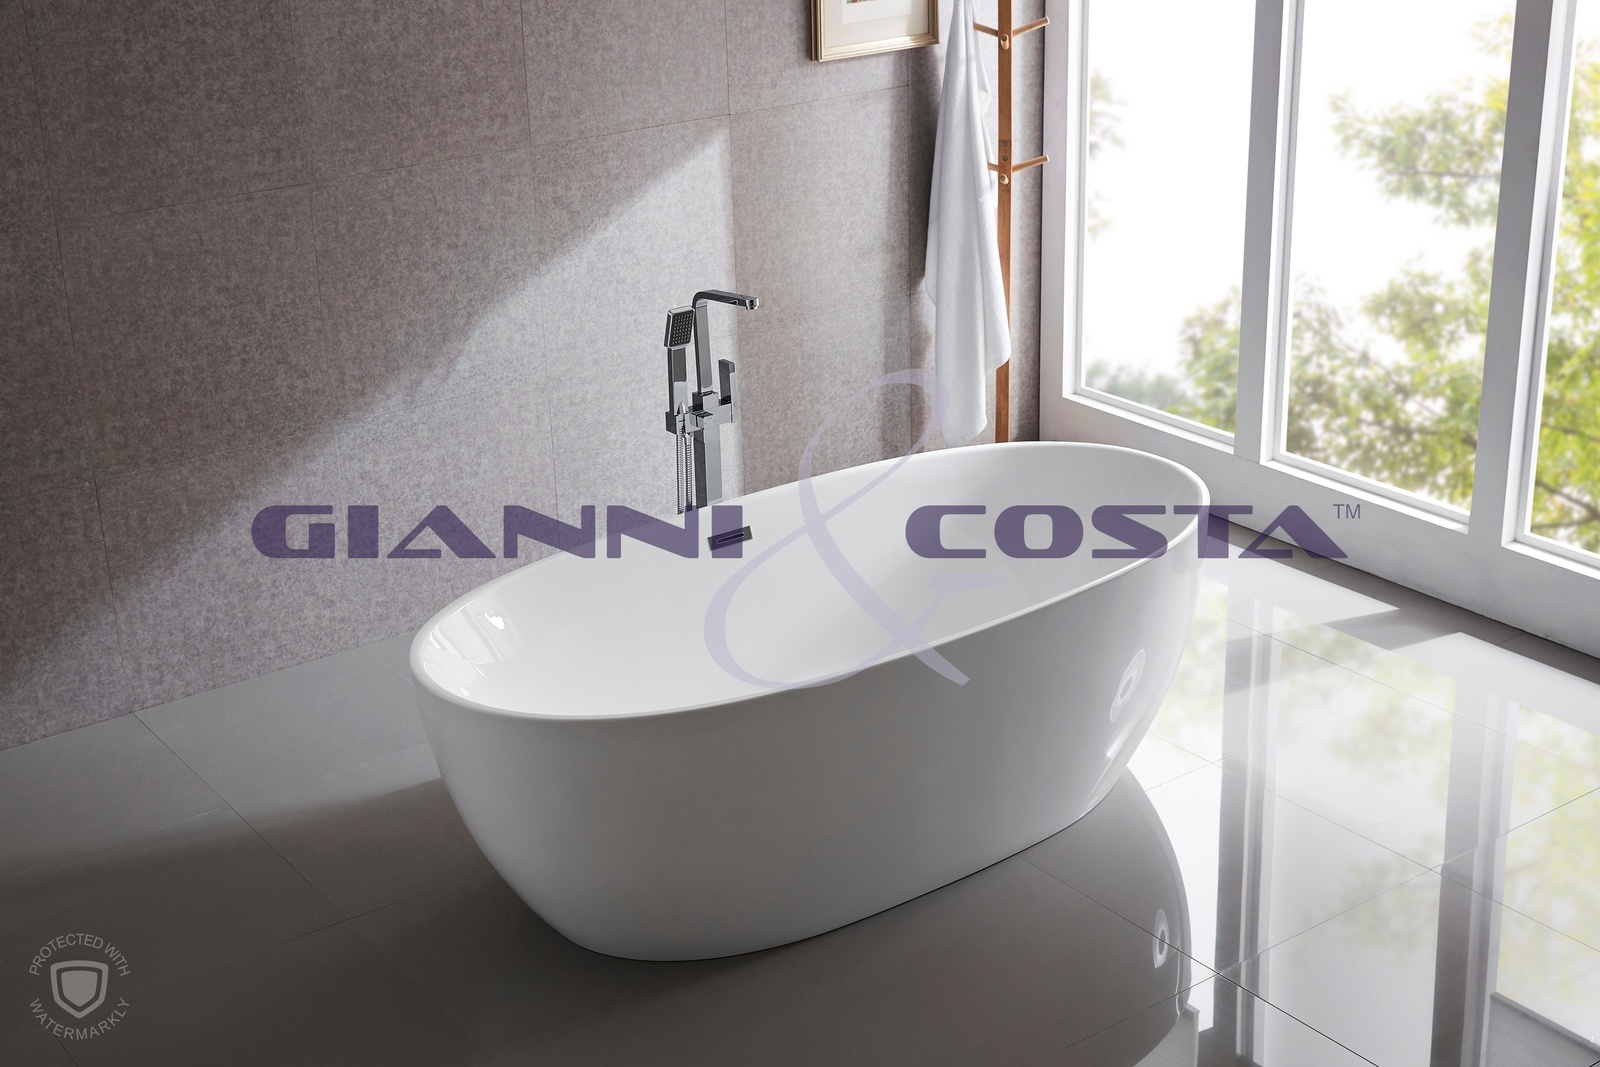 Acrylic Free Standing Bath Tub - Gloss White - Model Carrara GC6833 1600mm